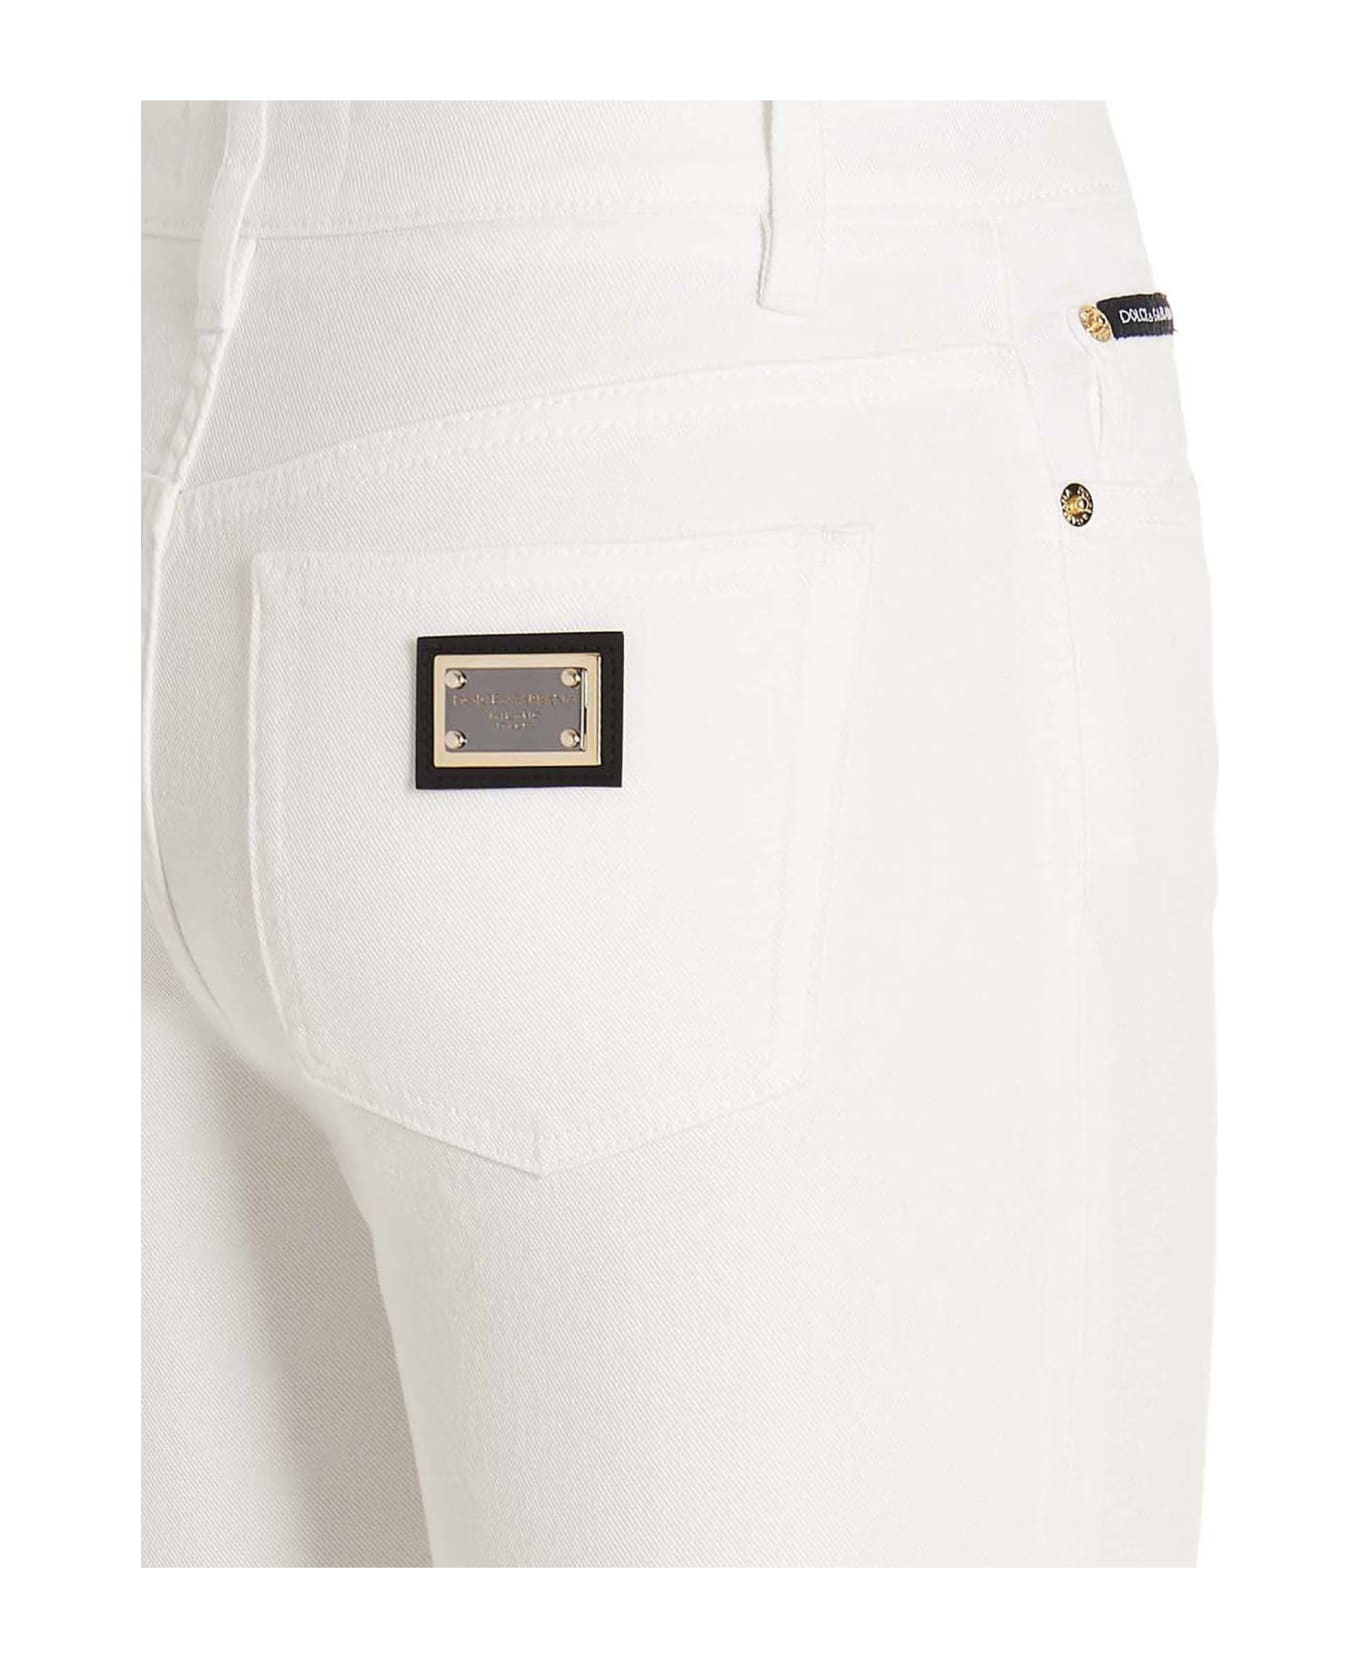 Dolce & Gabbana 5-pocket Jeans - White ボトムス